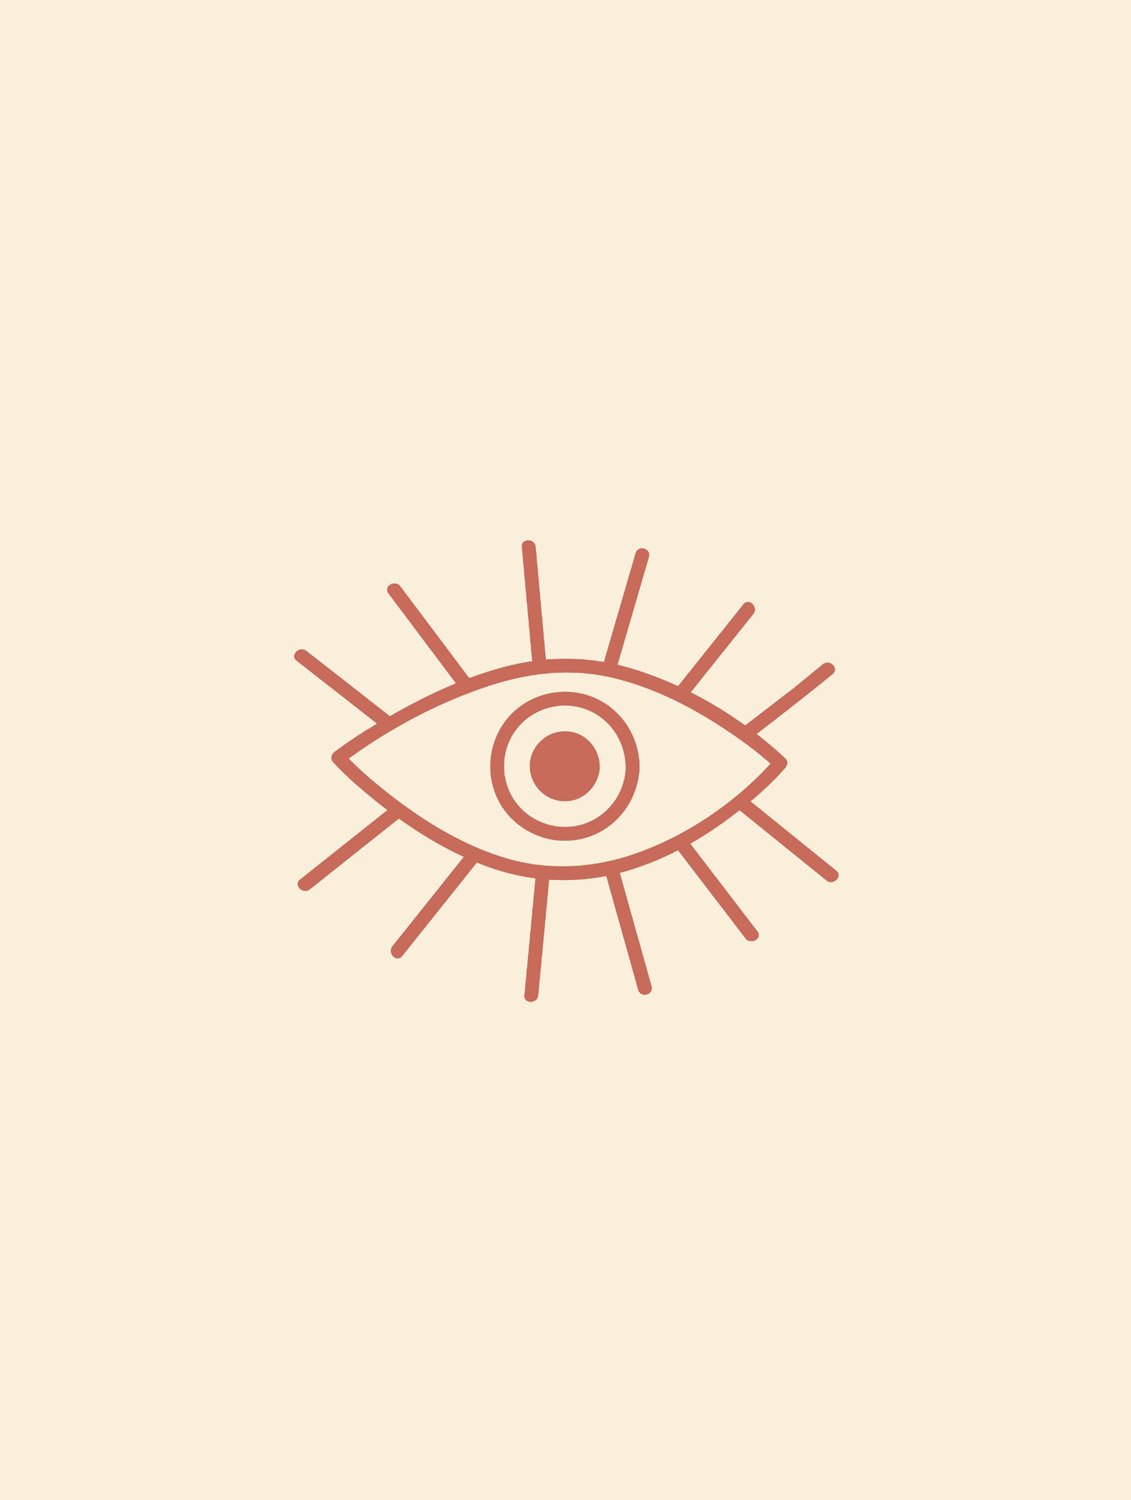 Minimalist eye icon illustration